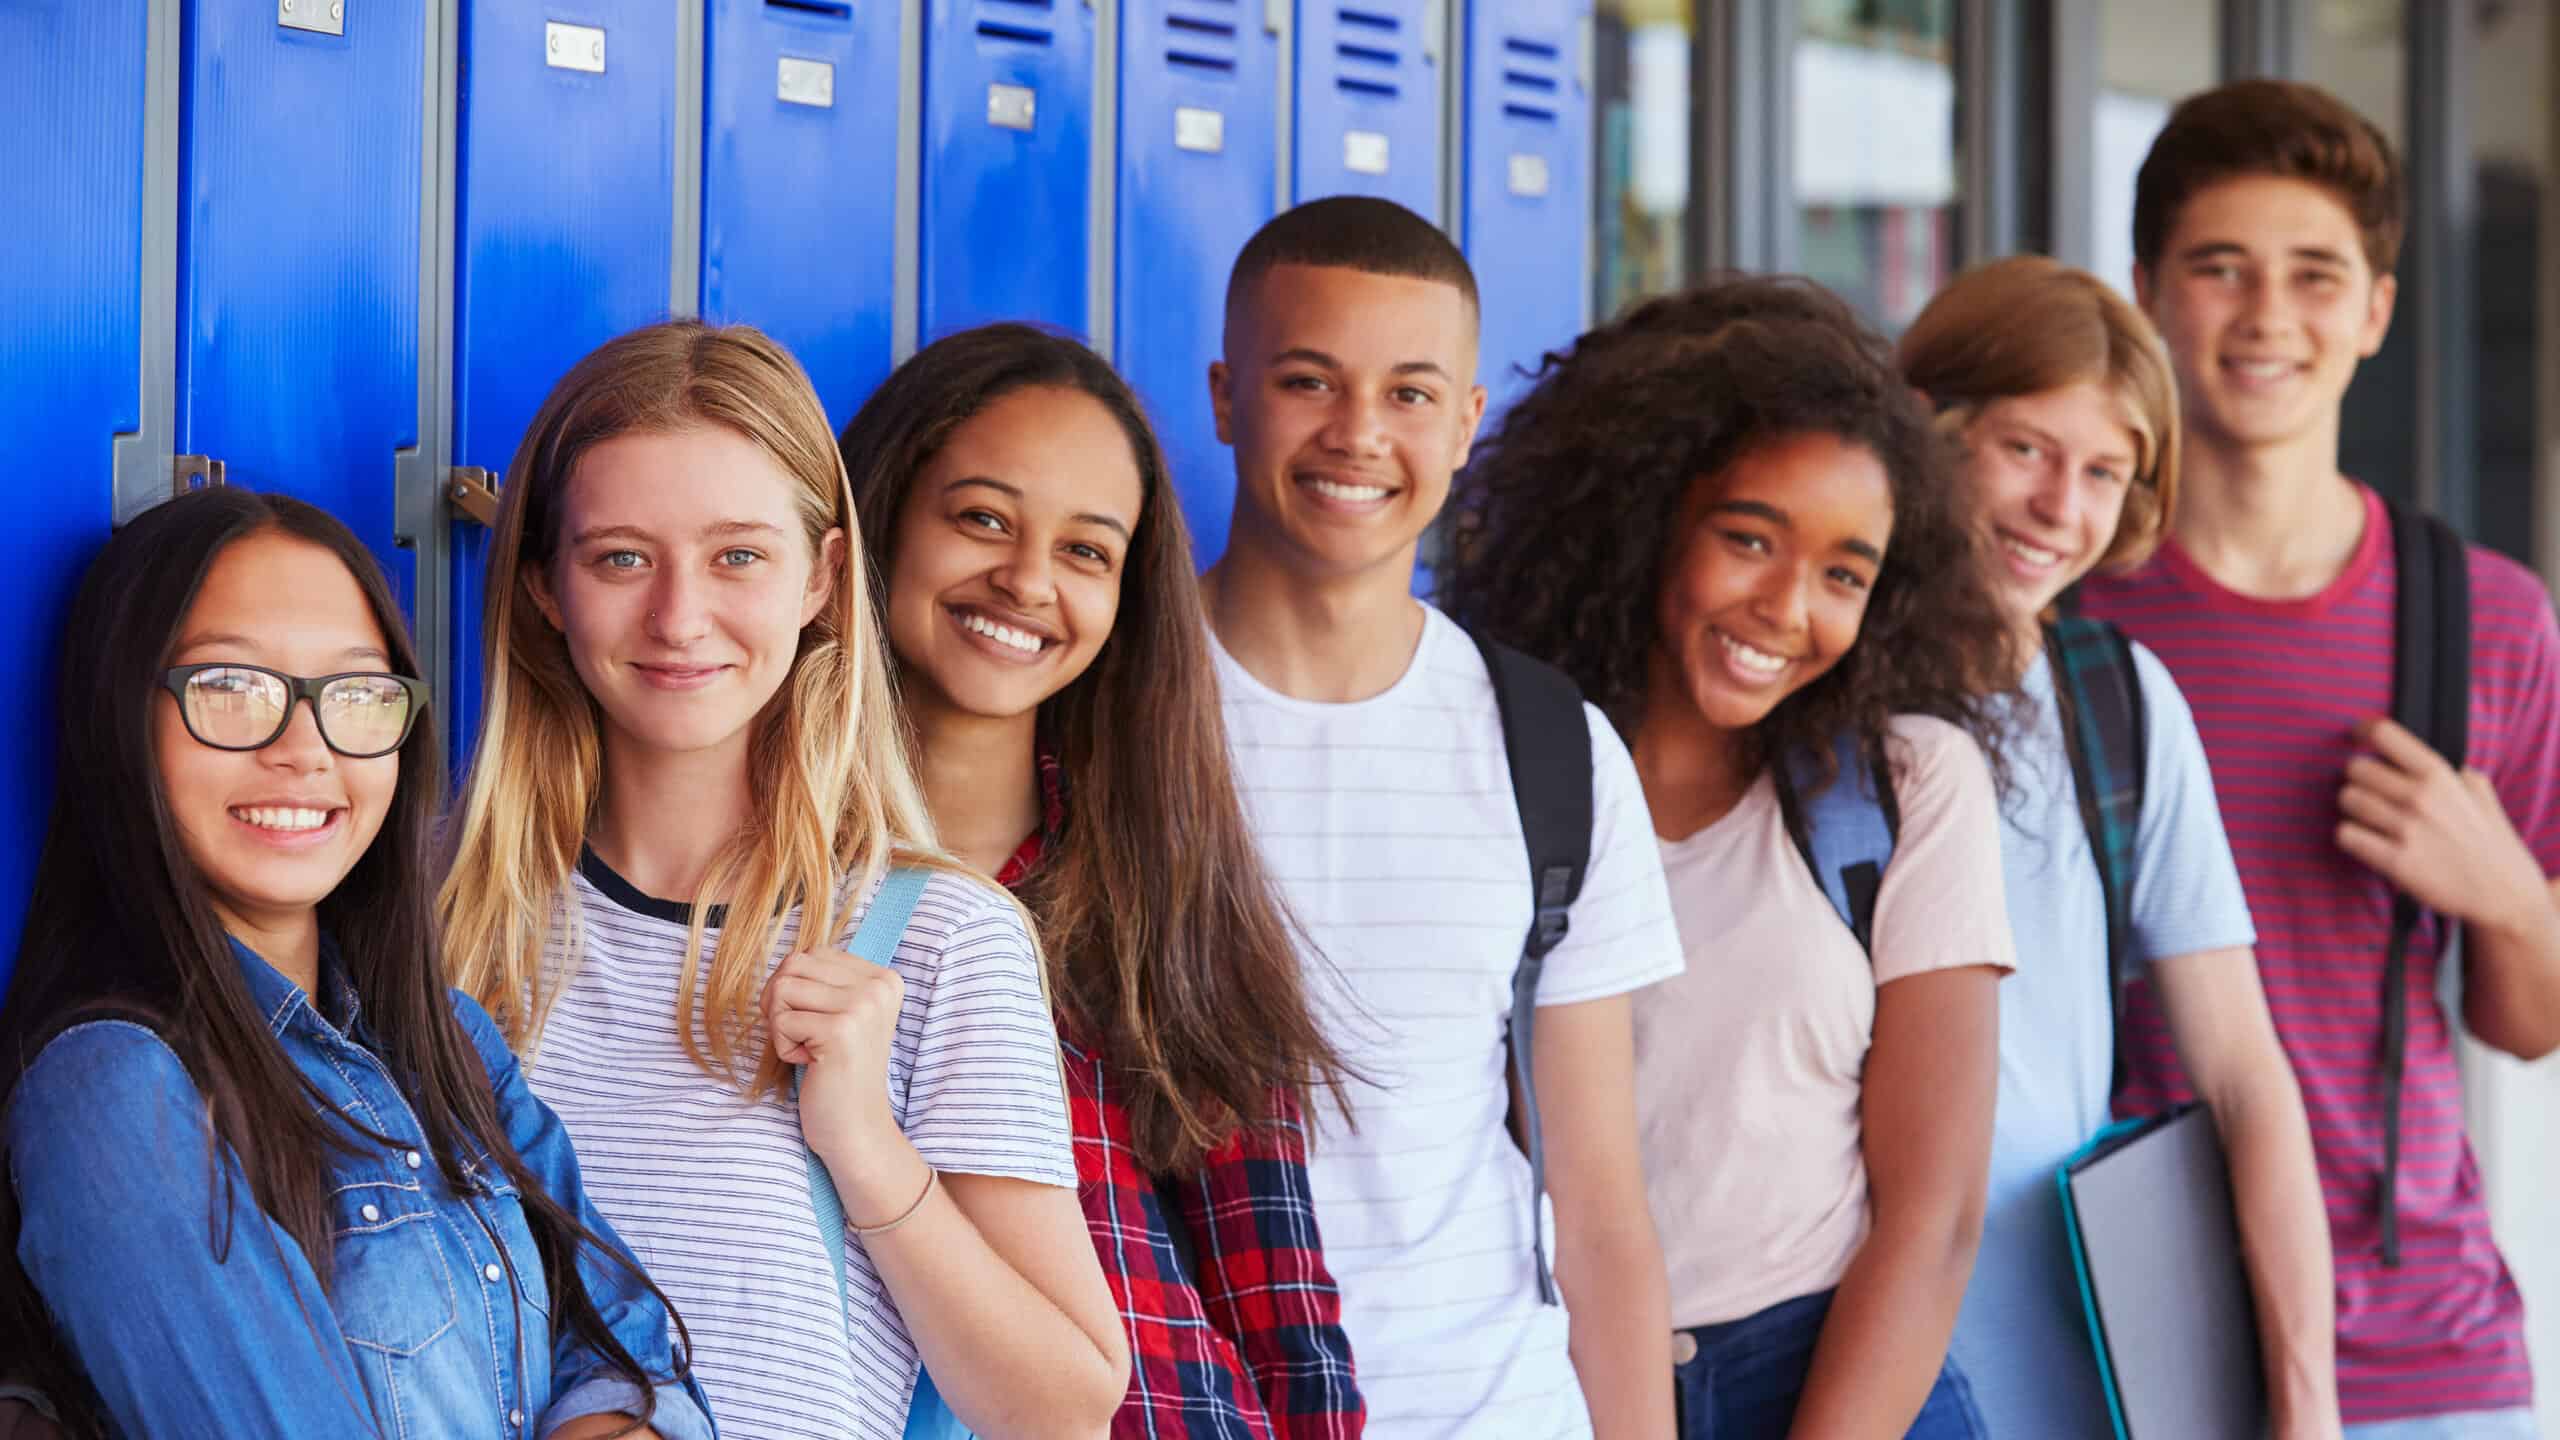 Teenage school kids smiling to the camera in the school corridor